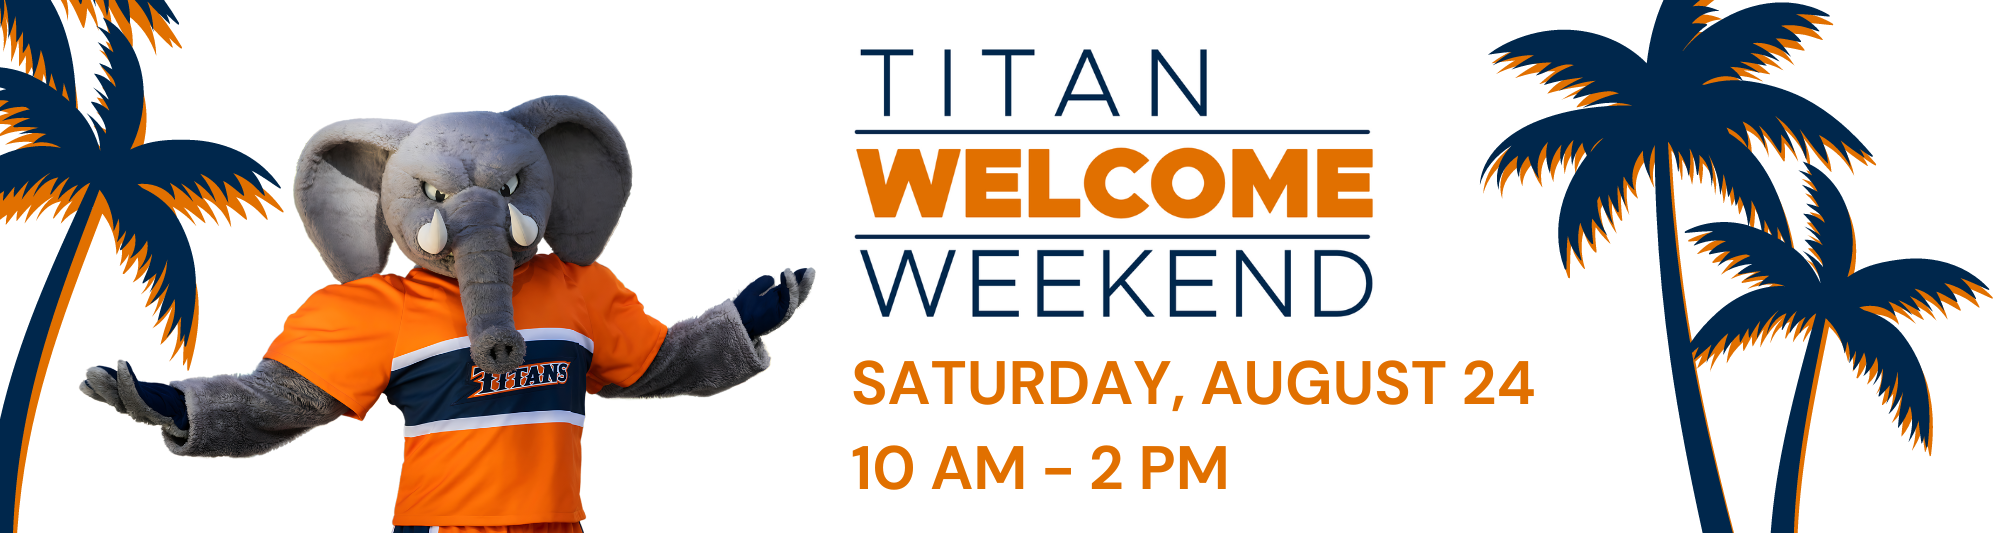 Titan Welcome Weekend